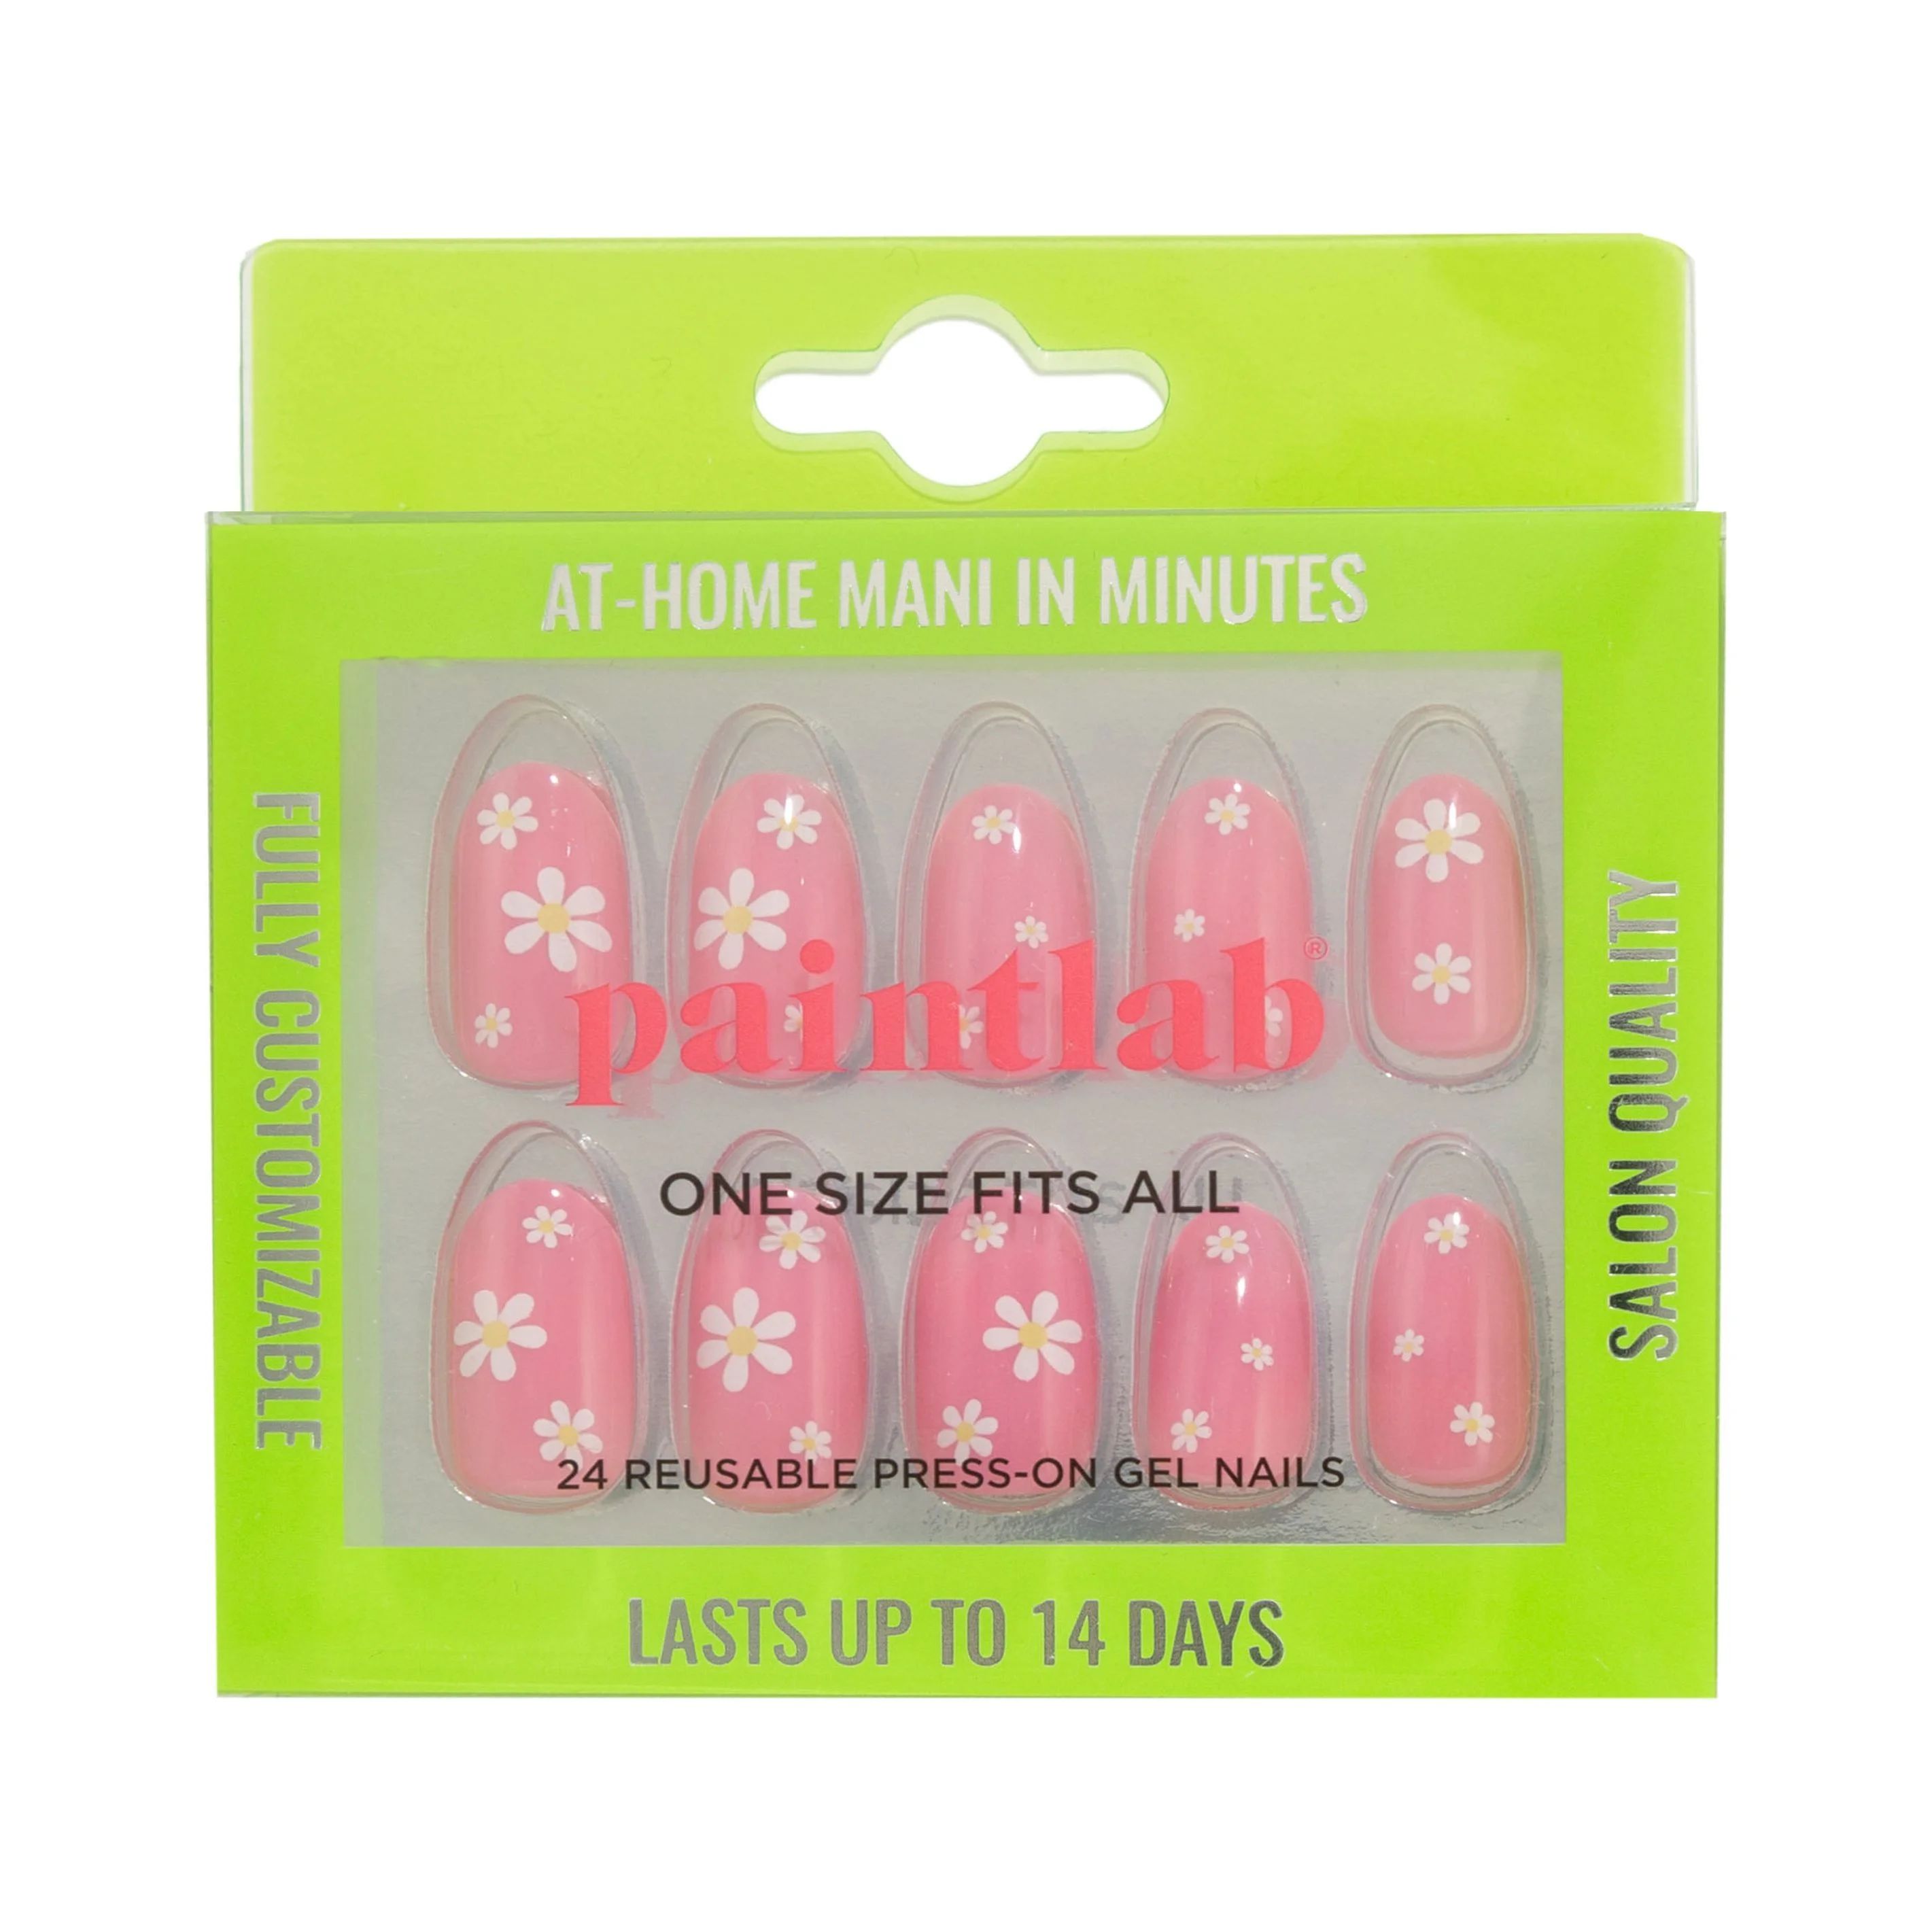 PaintLab Reusable Press-on Gel Nails Kit, Almond Shape, Pink Daisy, 30 Count | Walmart (US)